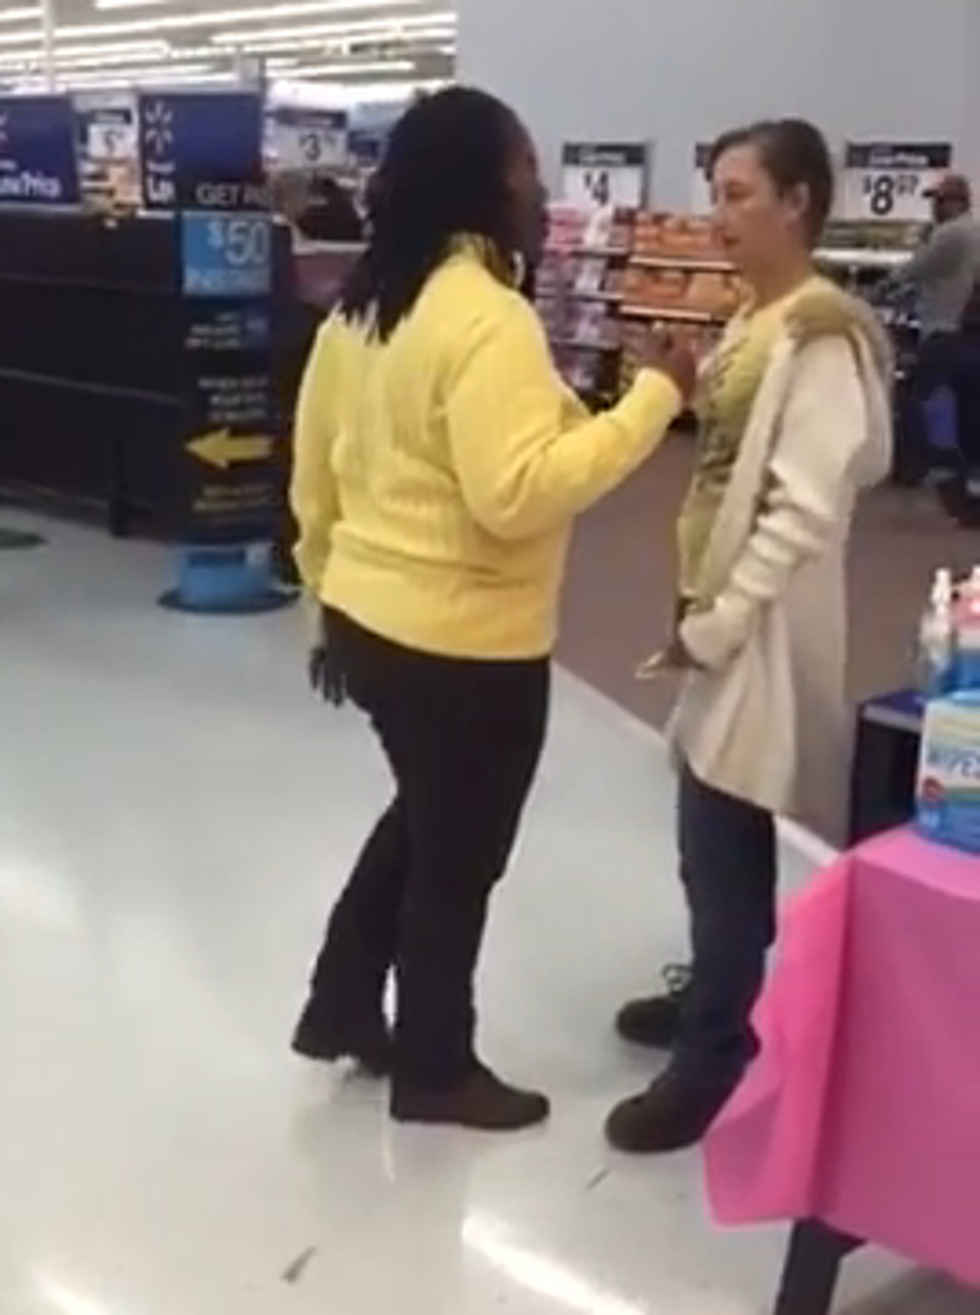 Head Butt, Take Down Caught on Video at Texas Walmart